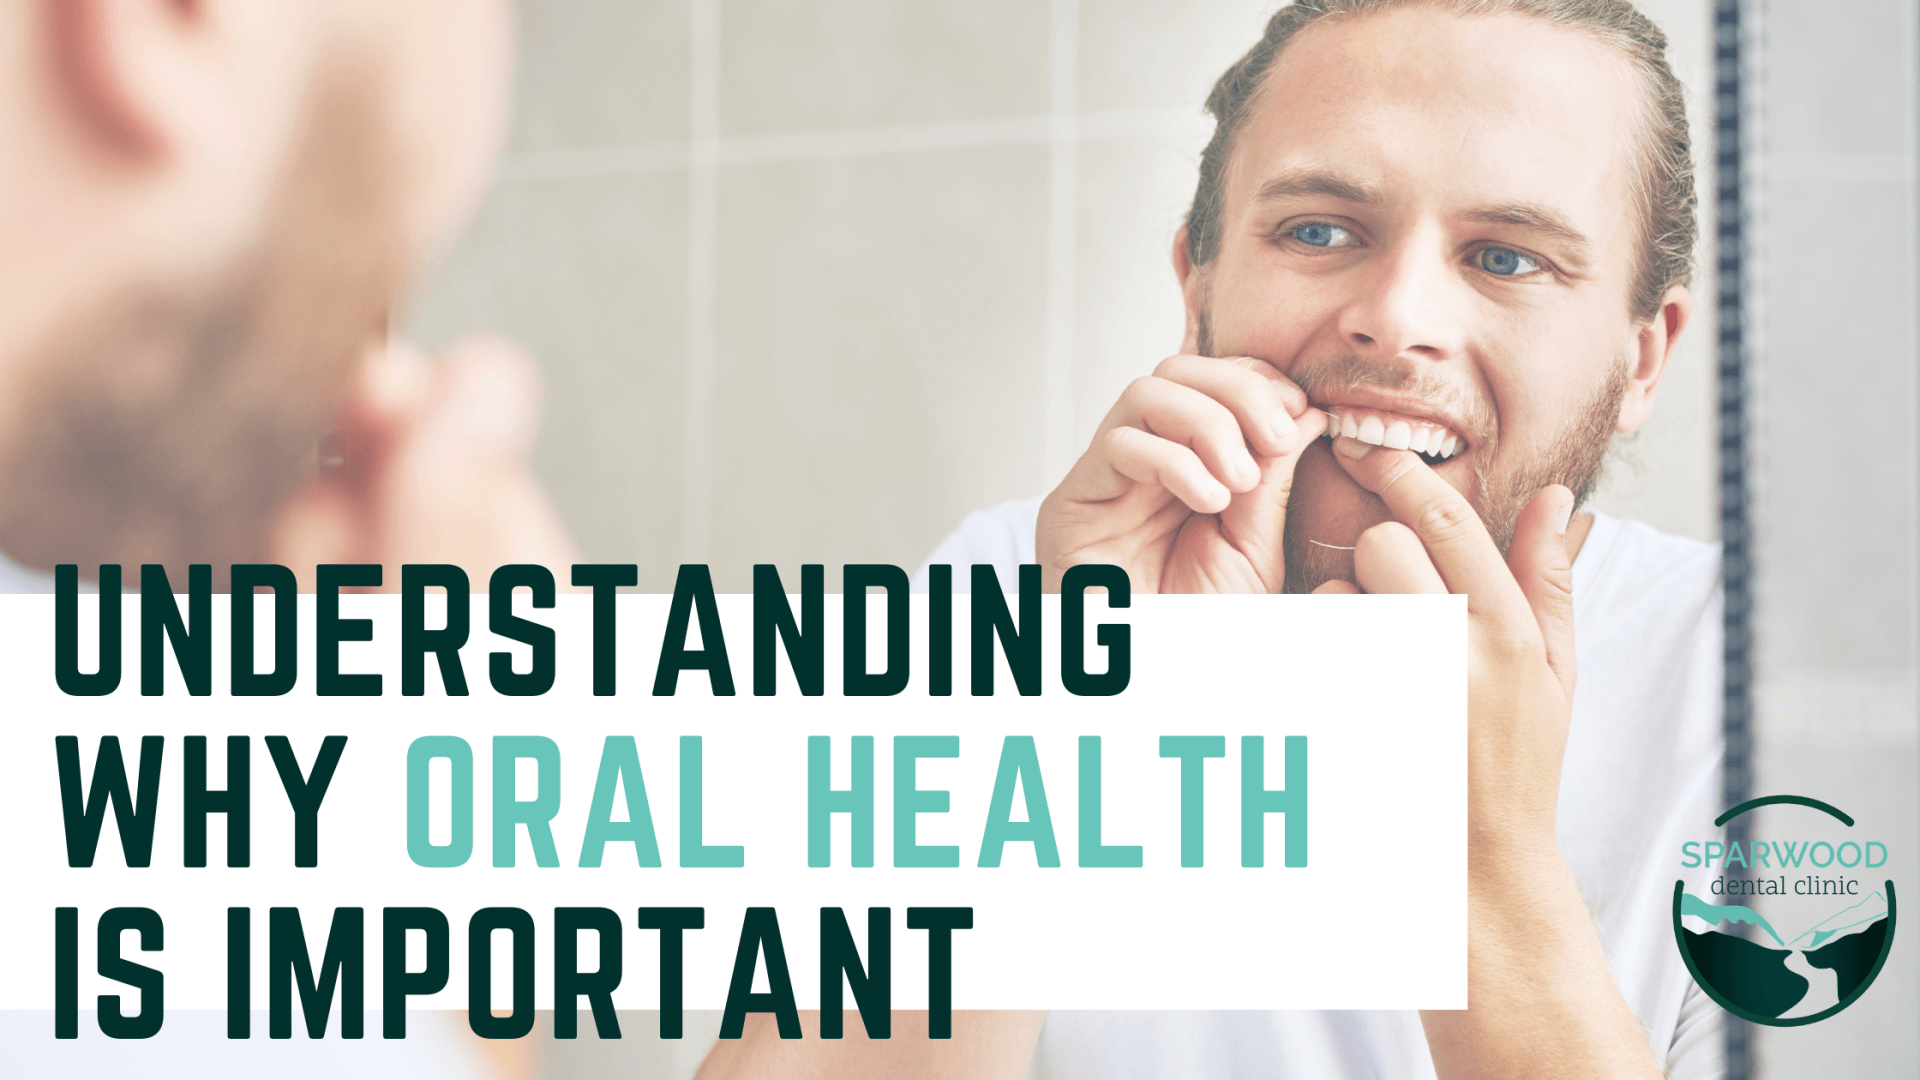 Flossing Teeth | Oral Health | Oral Health Importance | Oral Hygiene | Brushing Teeth | Healthy Diet | Dental Check ups